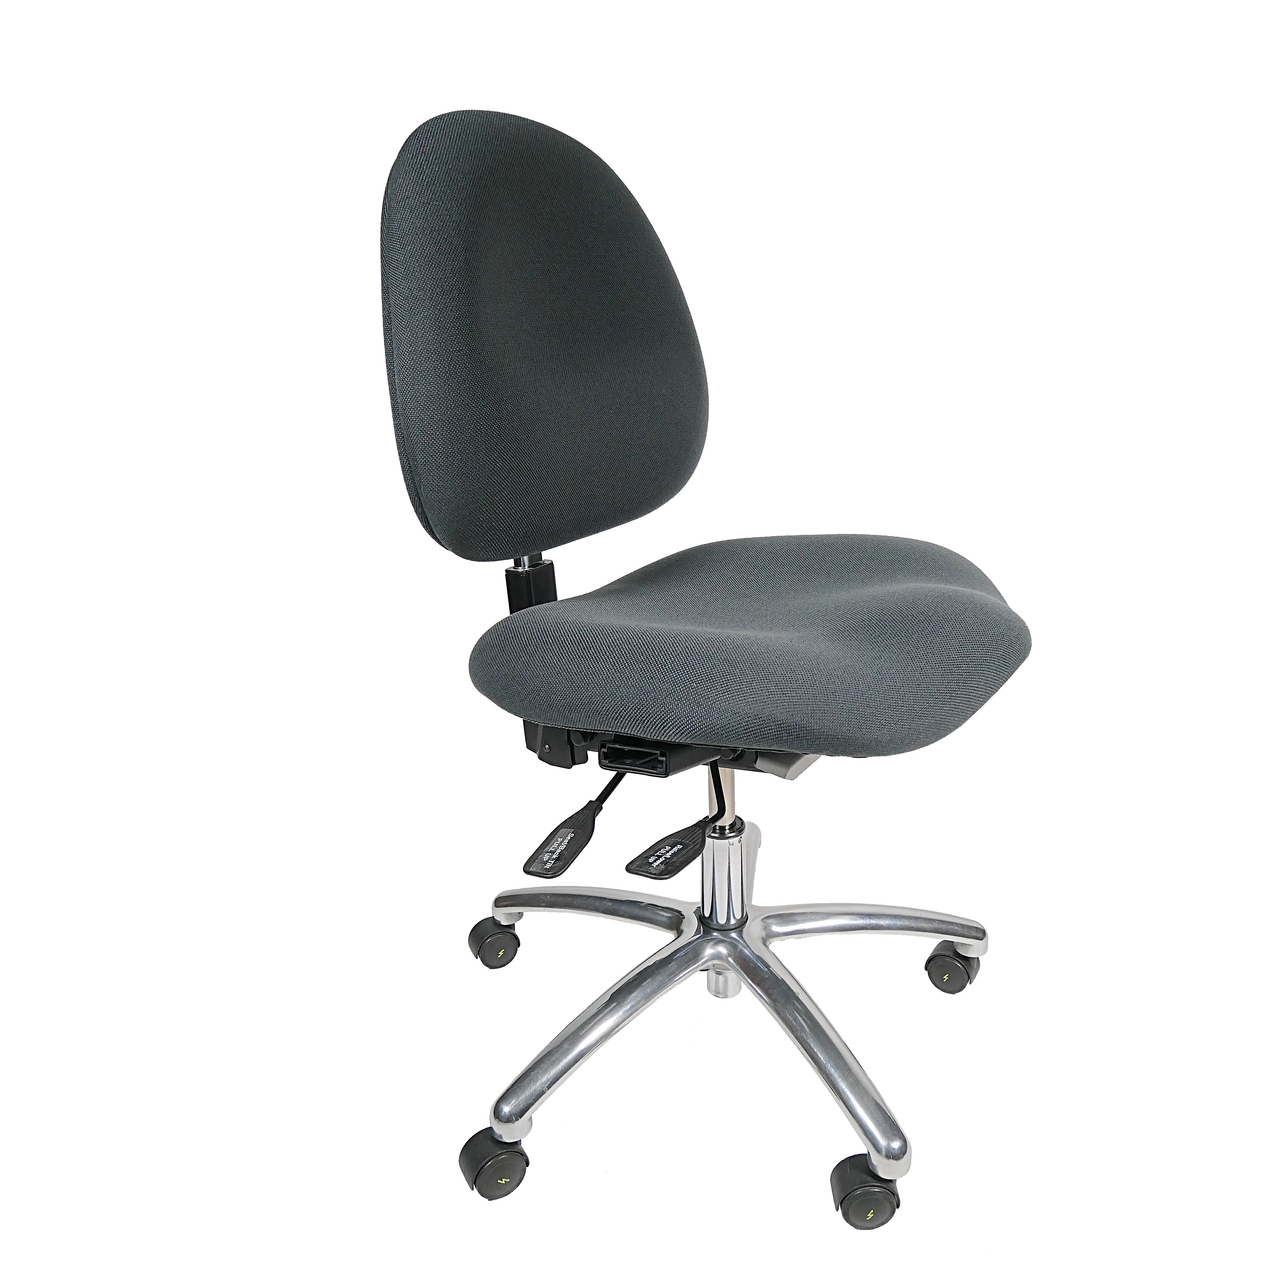 Nylon Base Tilt Charcoal LabTech Seating LT46026 Medium Bench Chair Casters Chrome Foot Ring Vinyl 